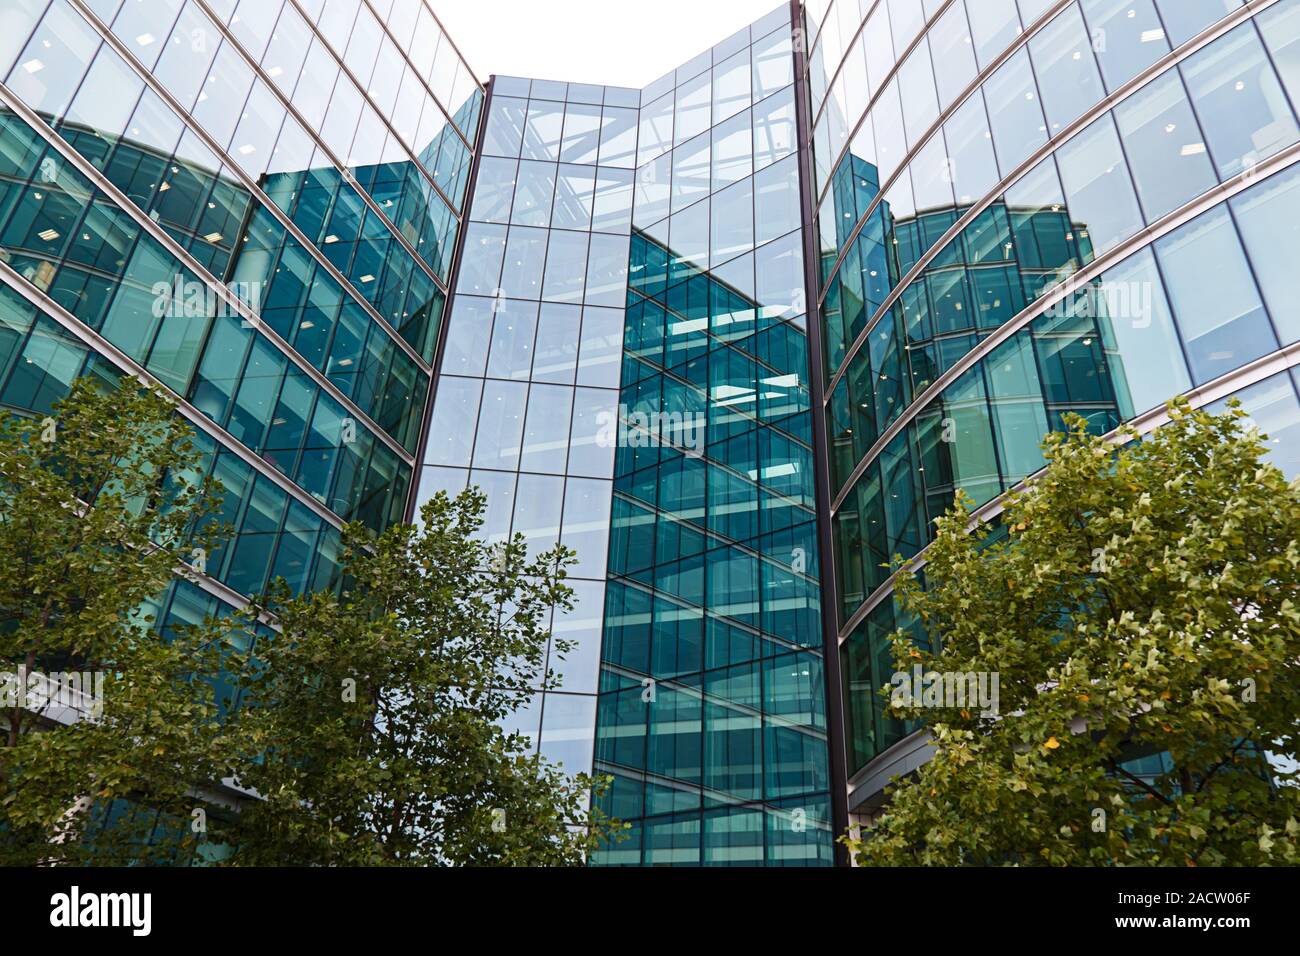 Facade of a modern office building London Stock Photo